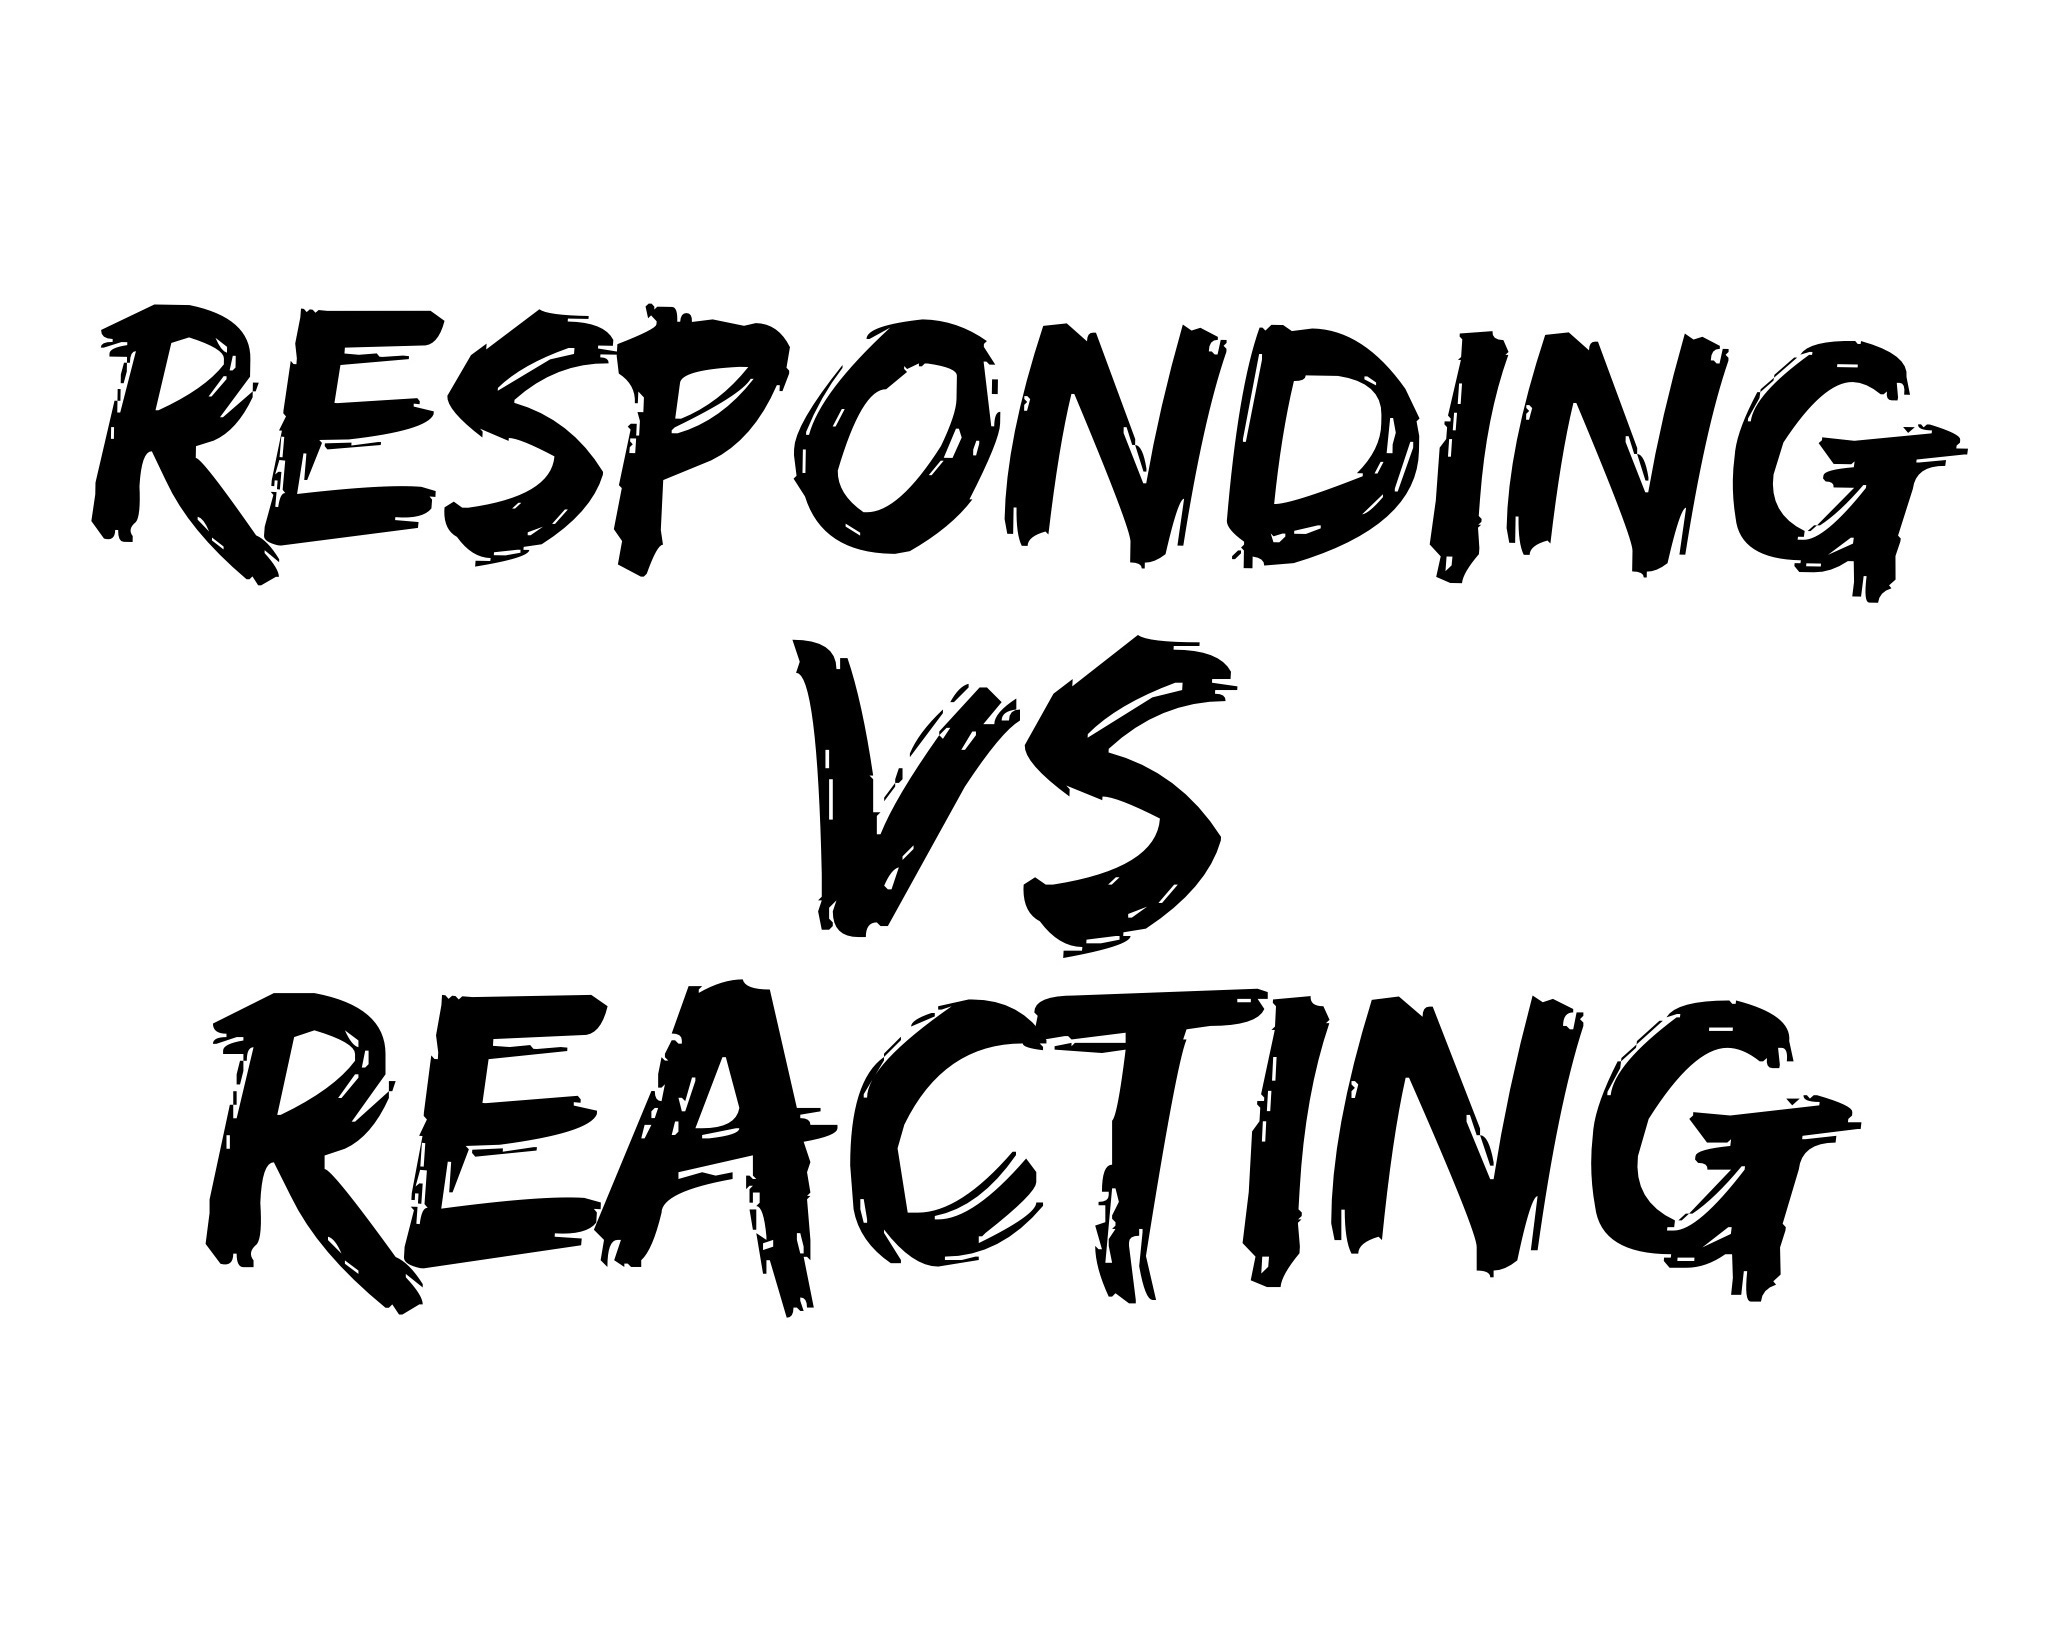 respond_rather_than_react